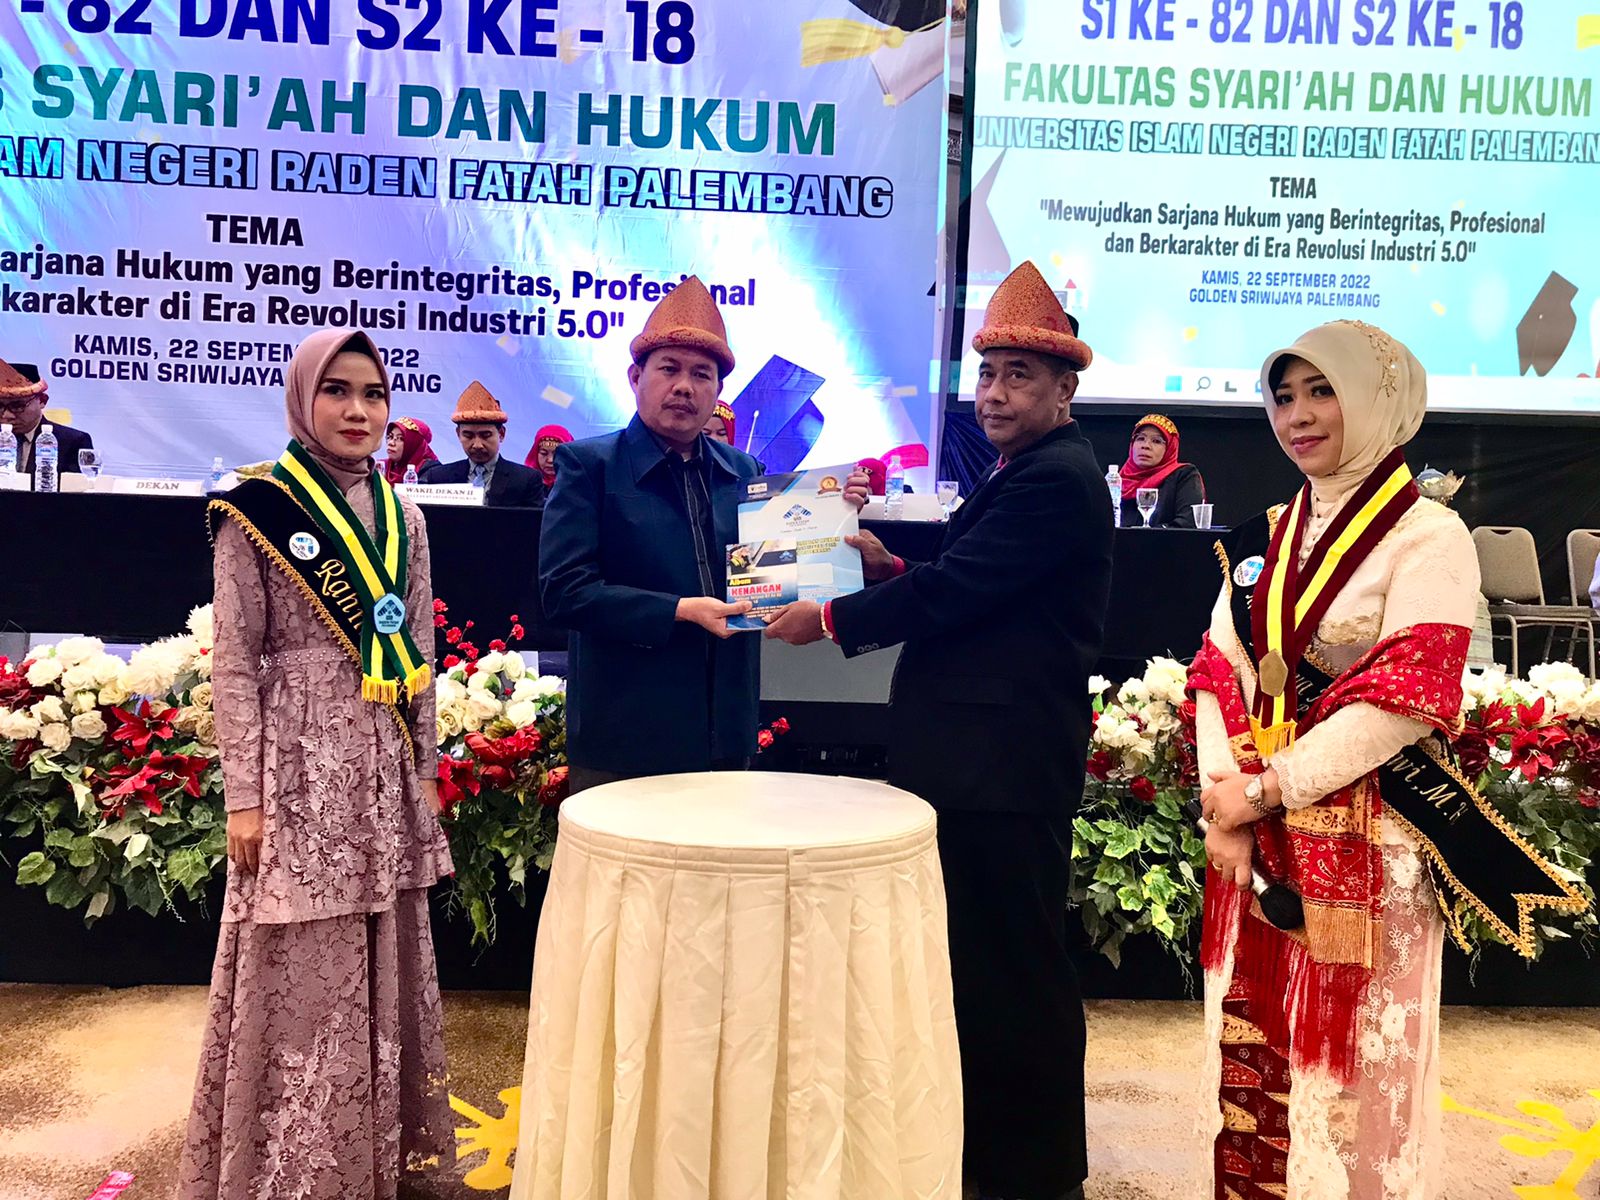 Alumni FSH UIN Raden Fatah Siap Hadapi Revolusi Industri 5.0